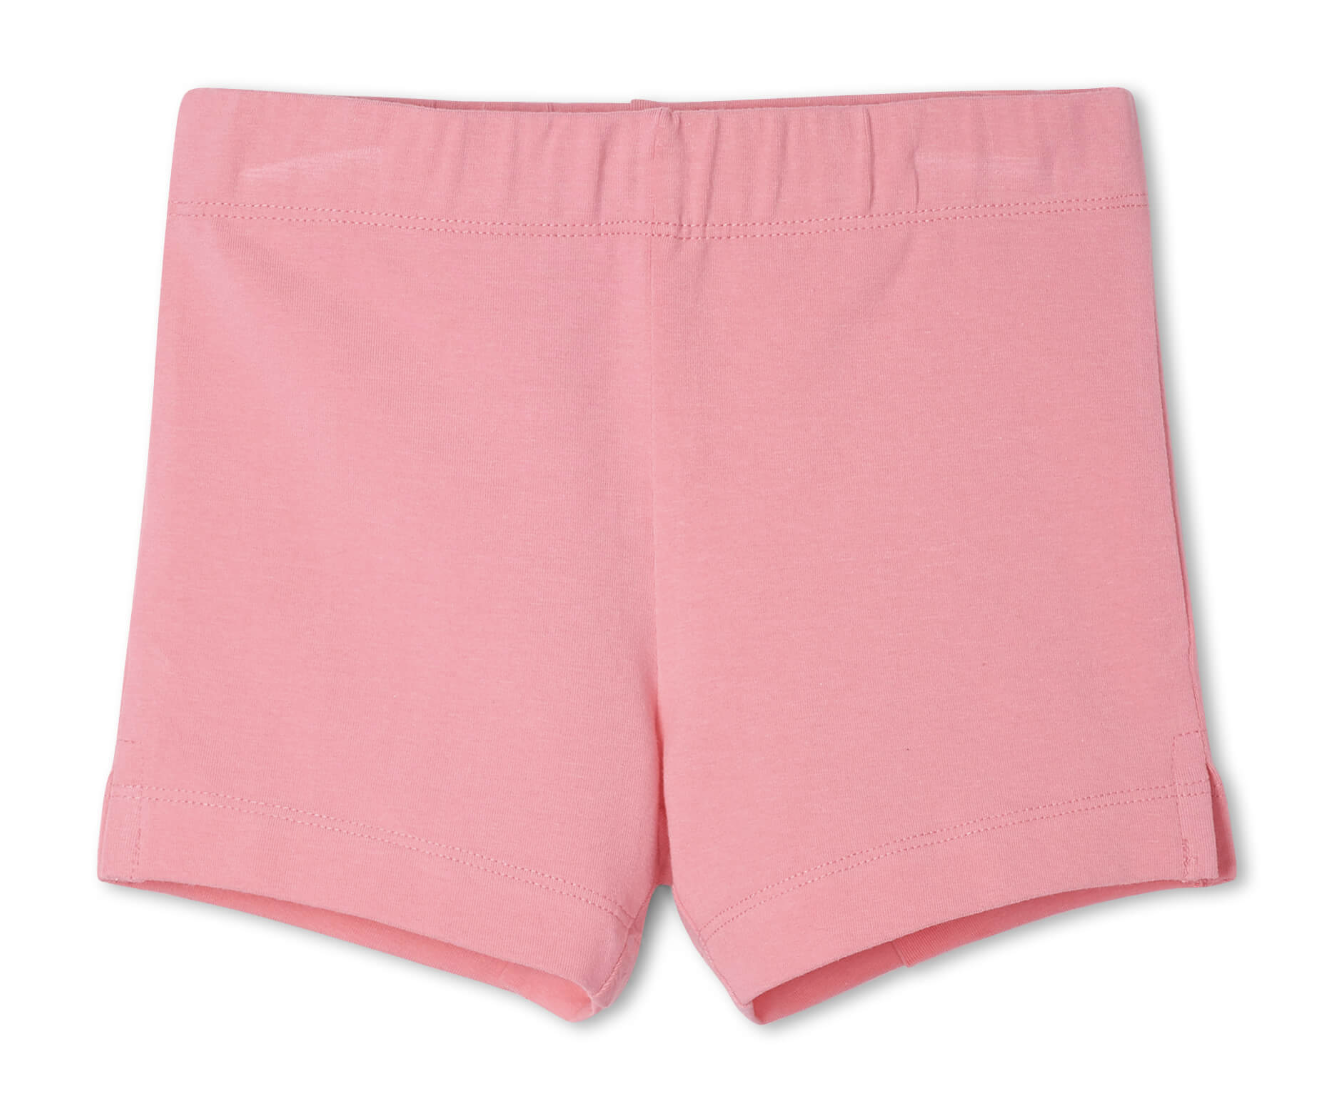 Light Pink Bicycle Shorts